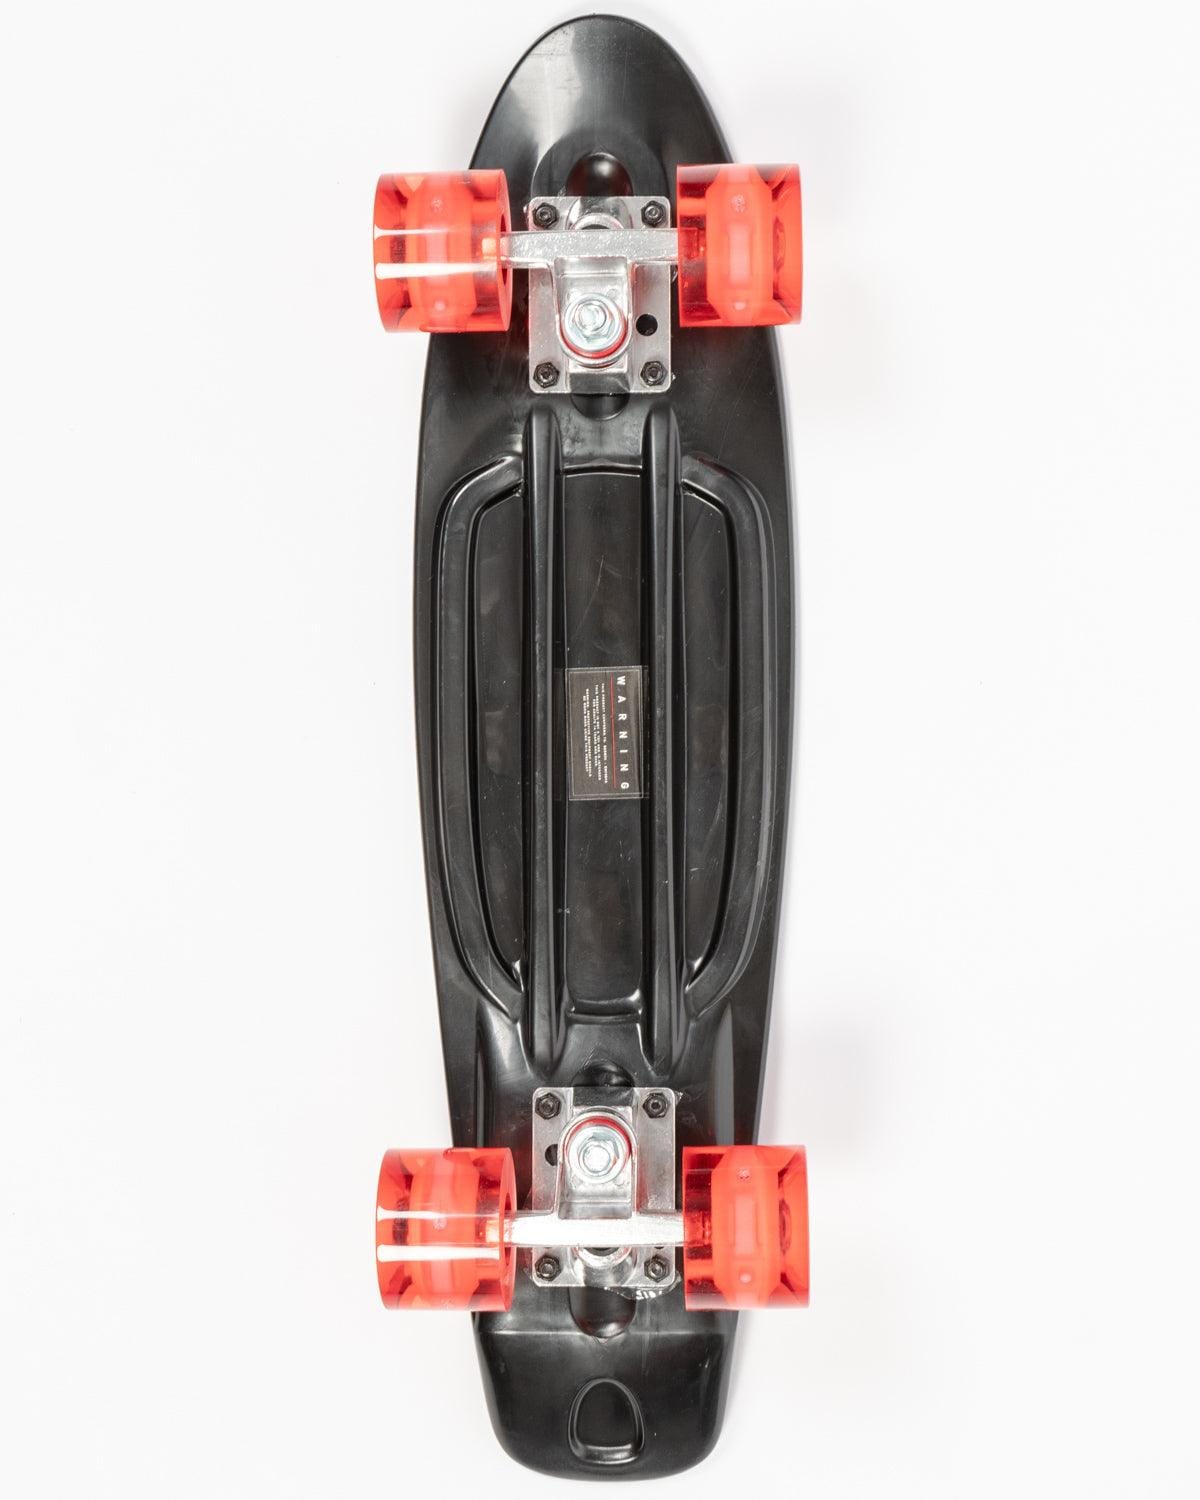 Retroride - Mini Skateboard with Flashing Wheels - Black/Red - Saltrock